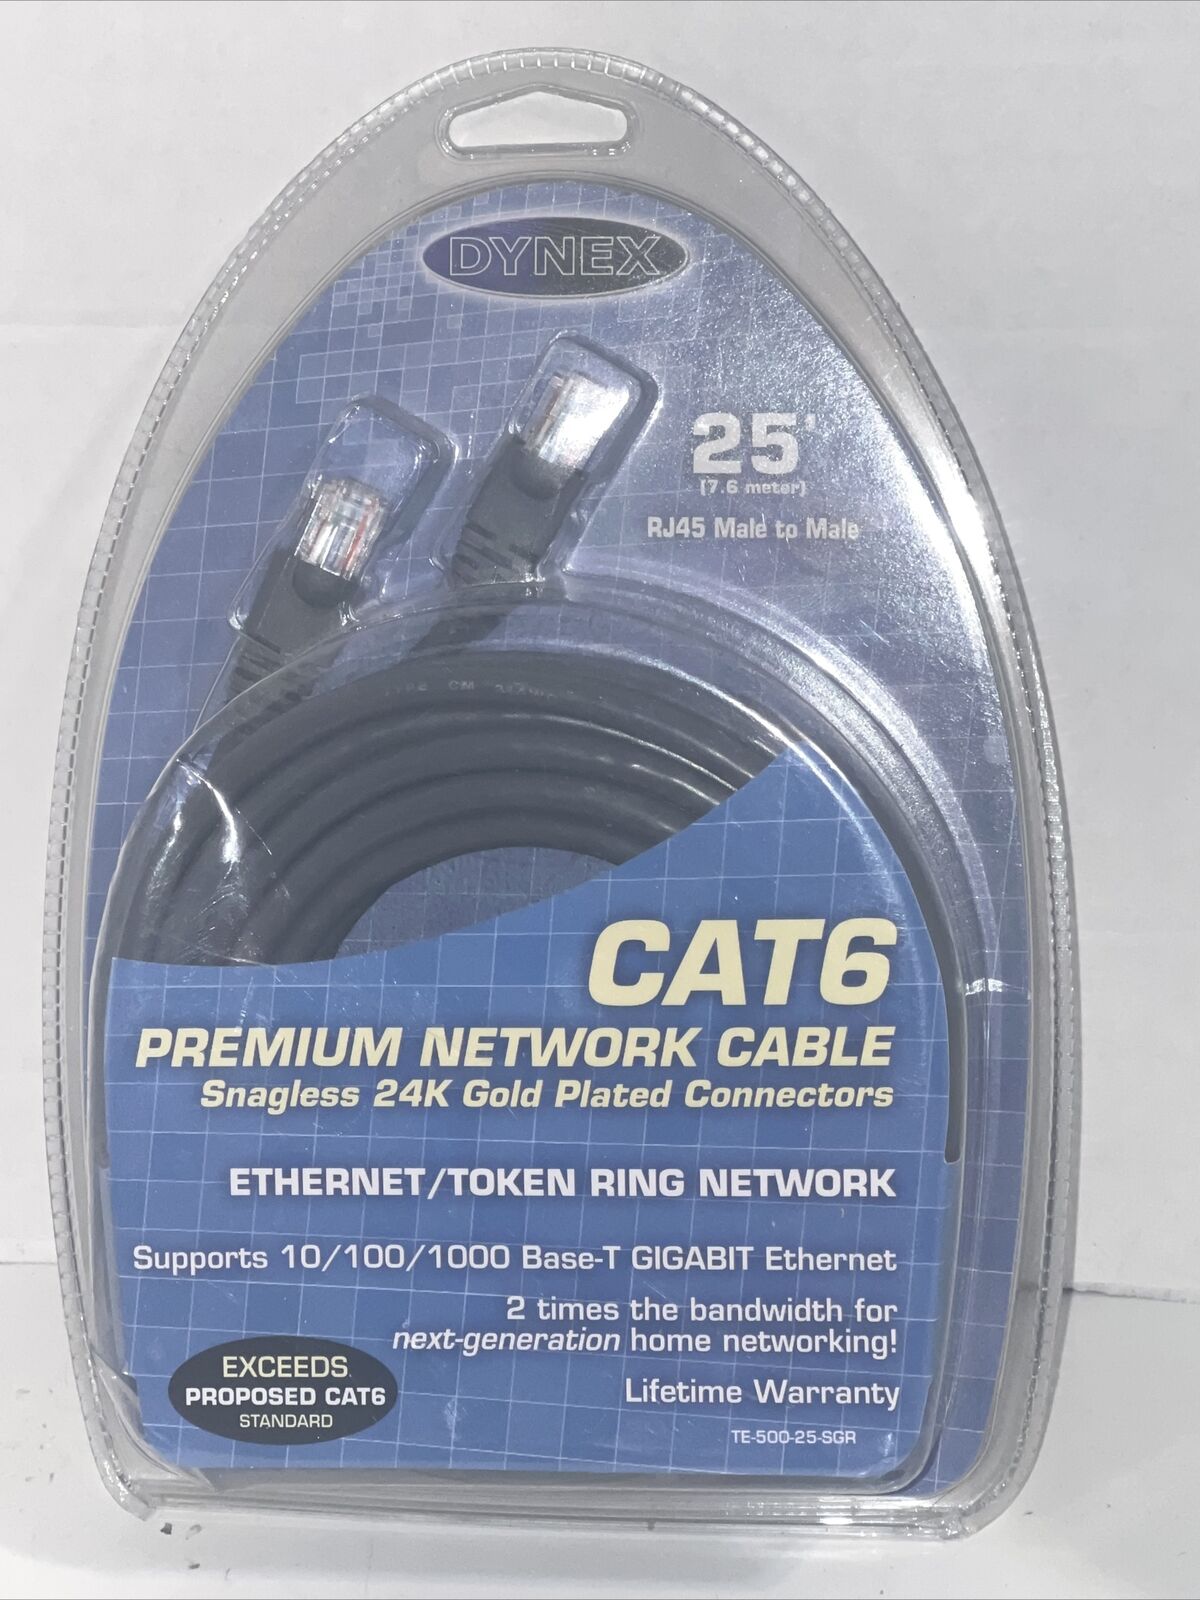 Dynex Cat6 25ft Premium Network Cable 25'/7.6m